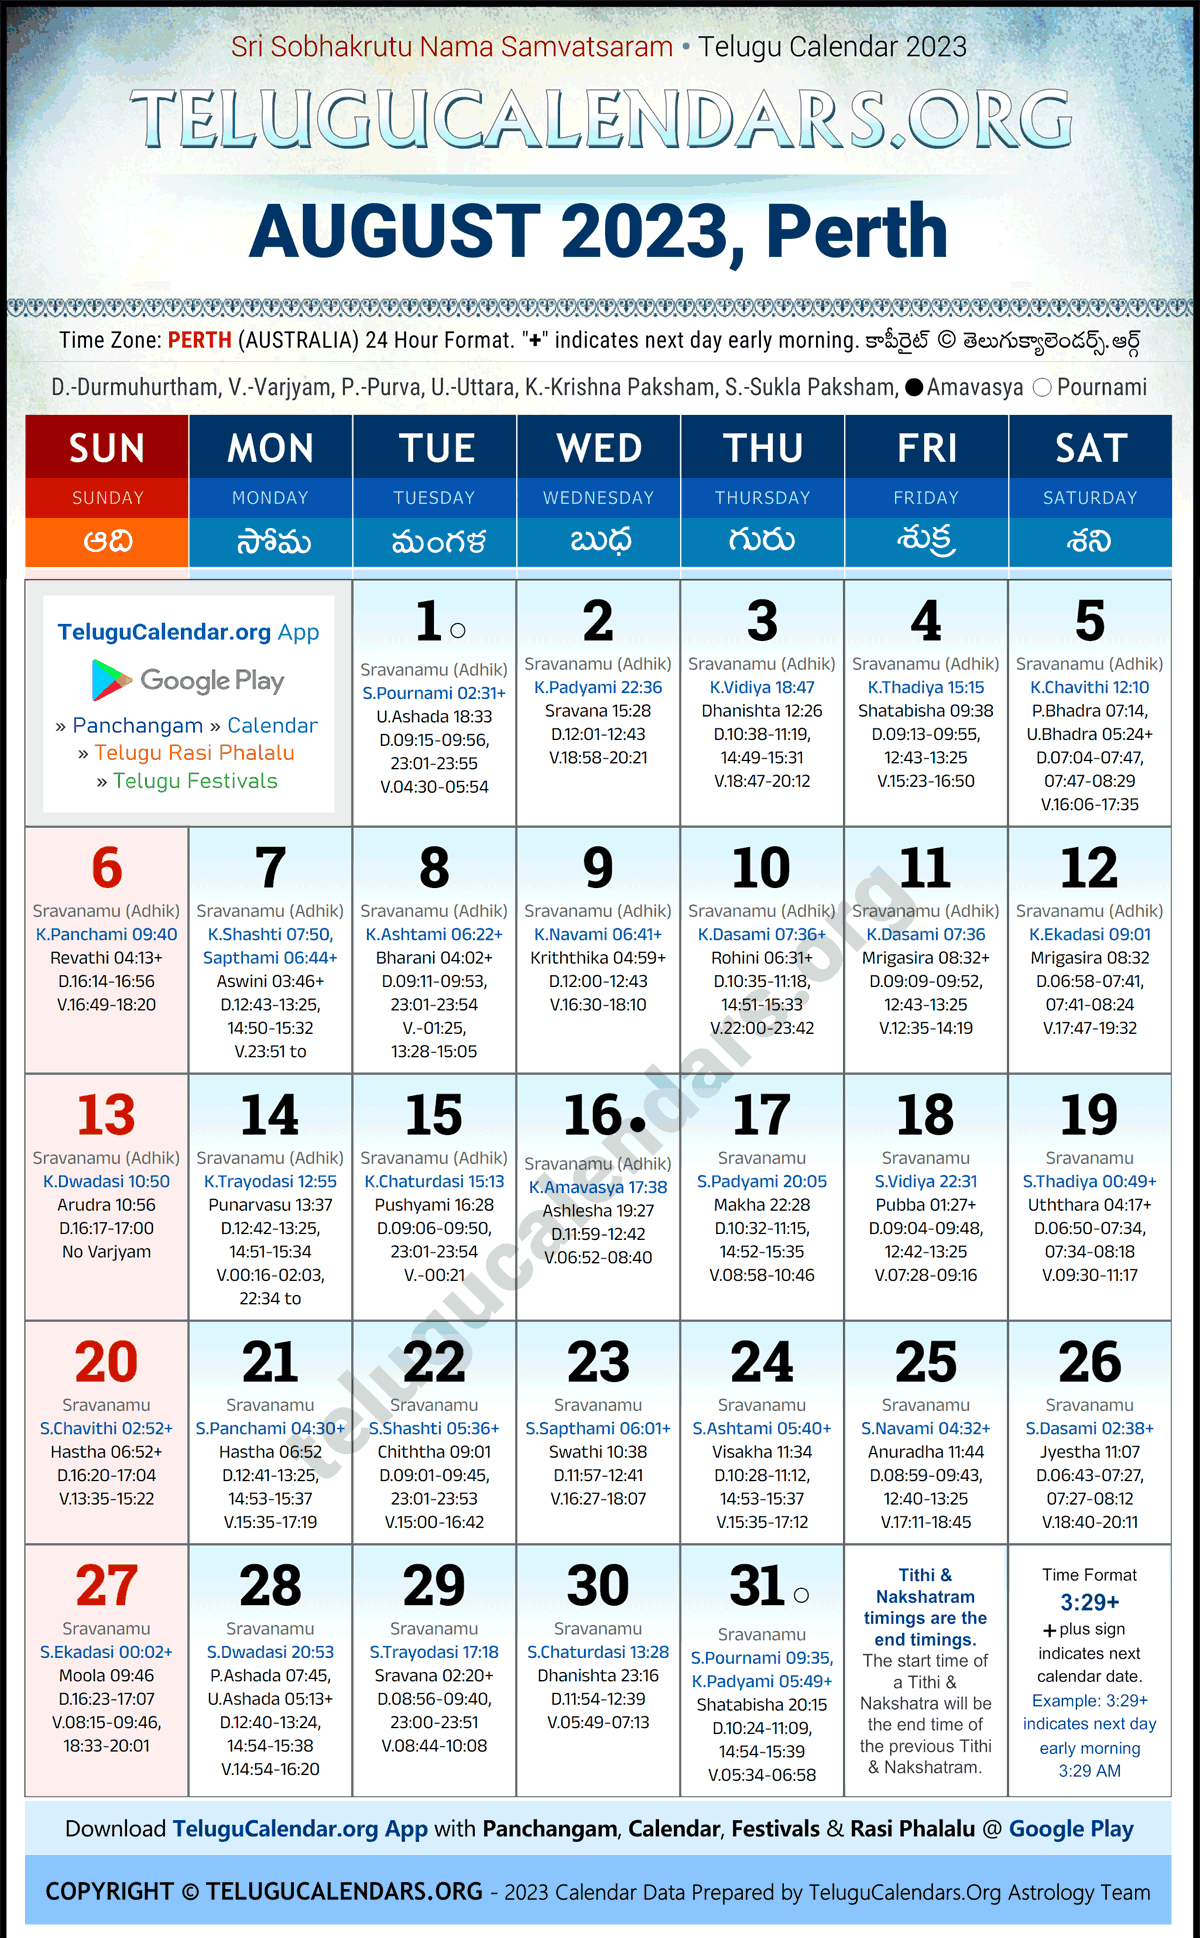 Telugu Calendar 2023 August Festivals for Perth